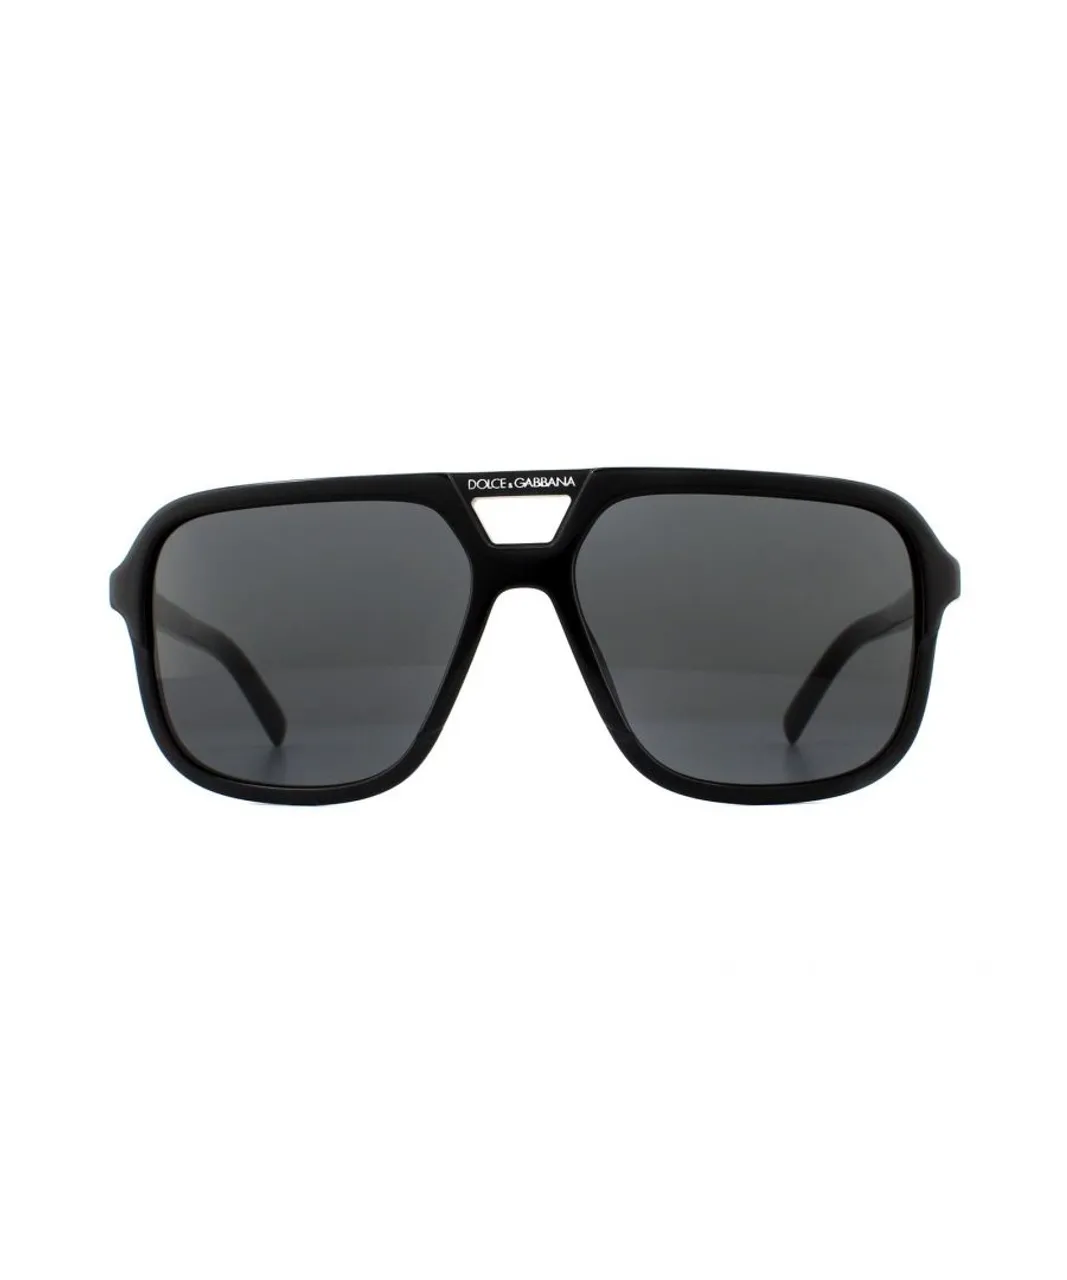 Dolce & Gabbana Mens Sunglasses DG4354 501/87 Black Grey Gradient - One